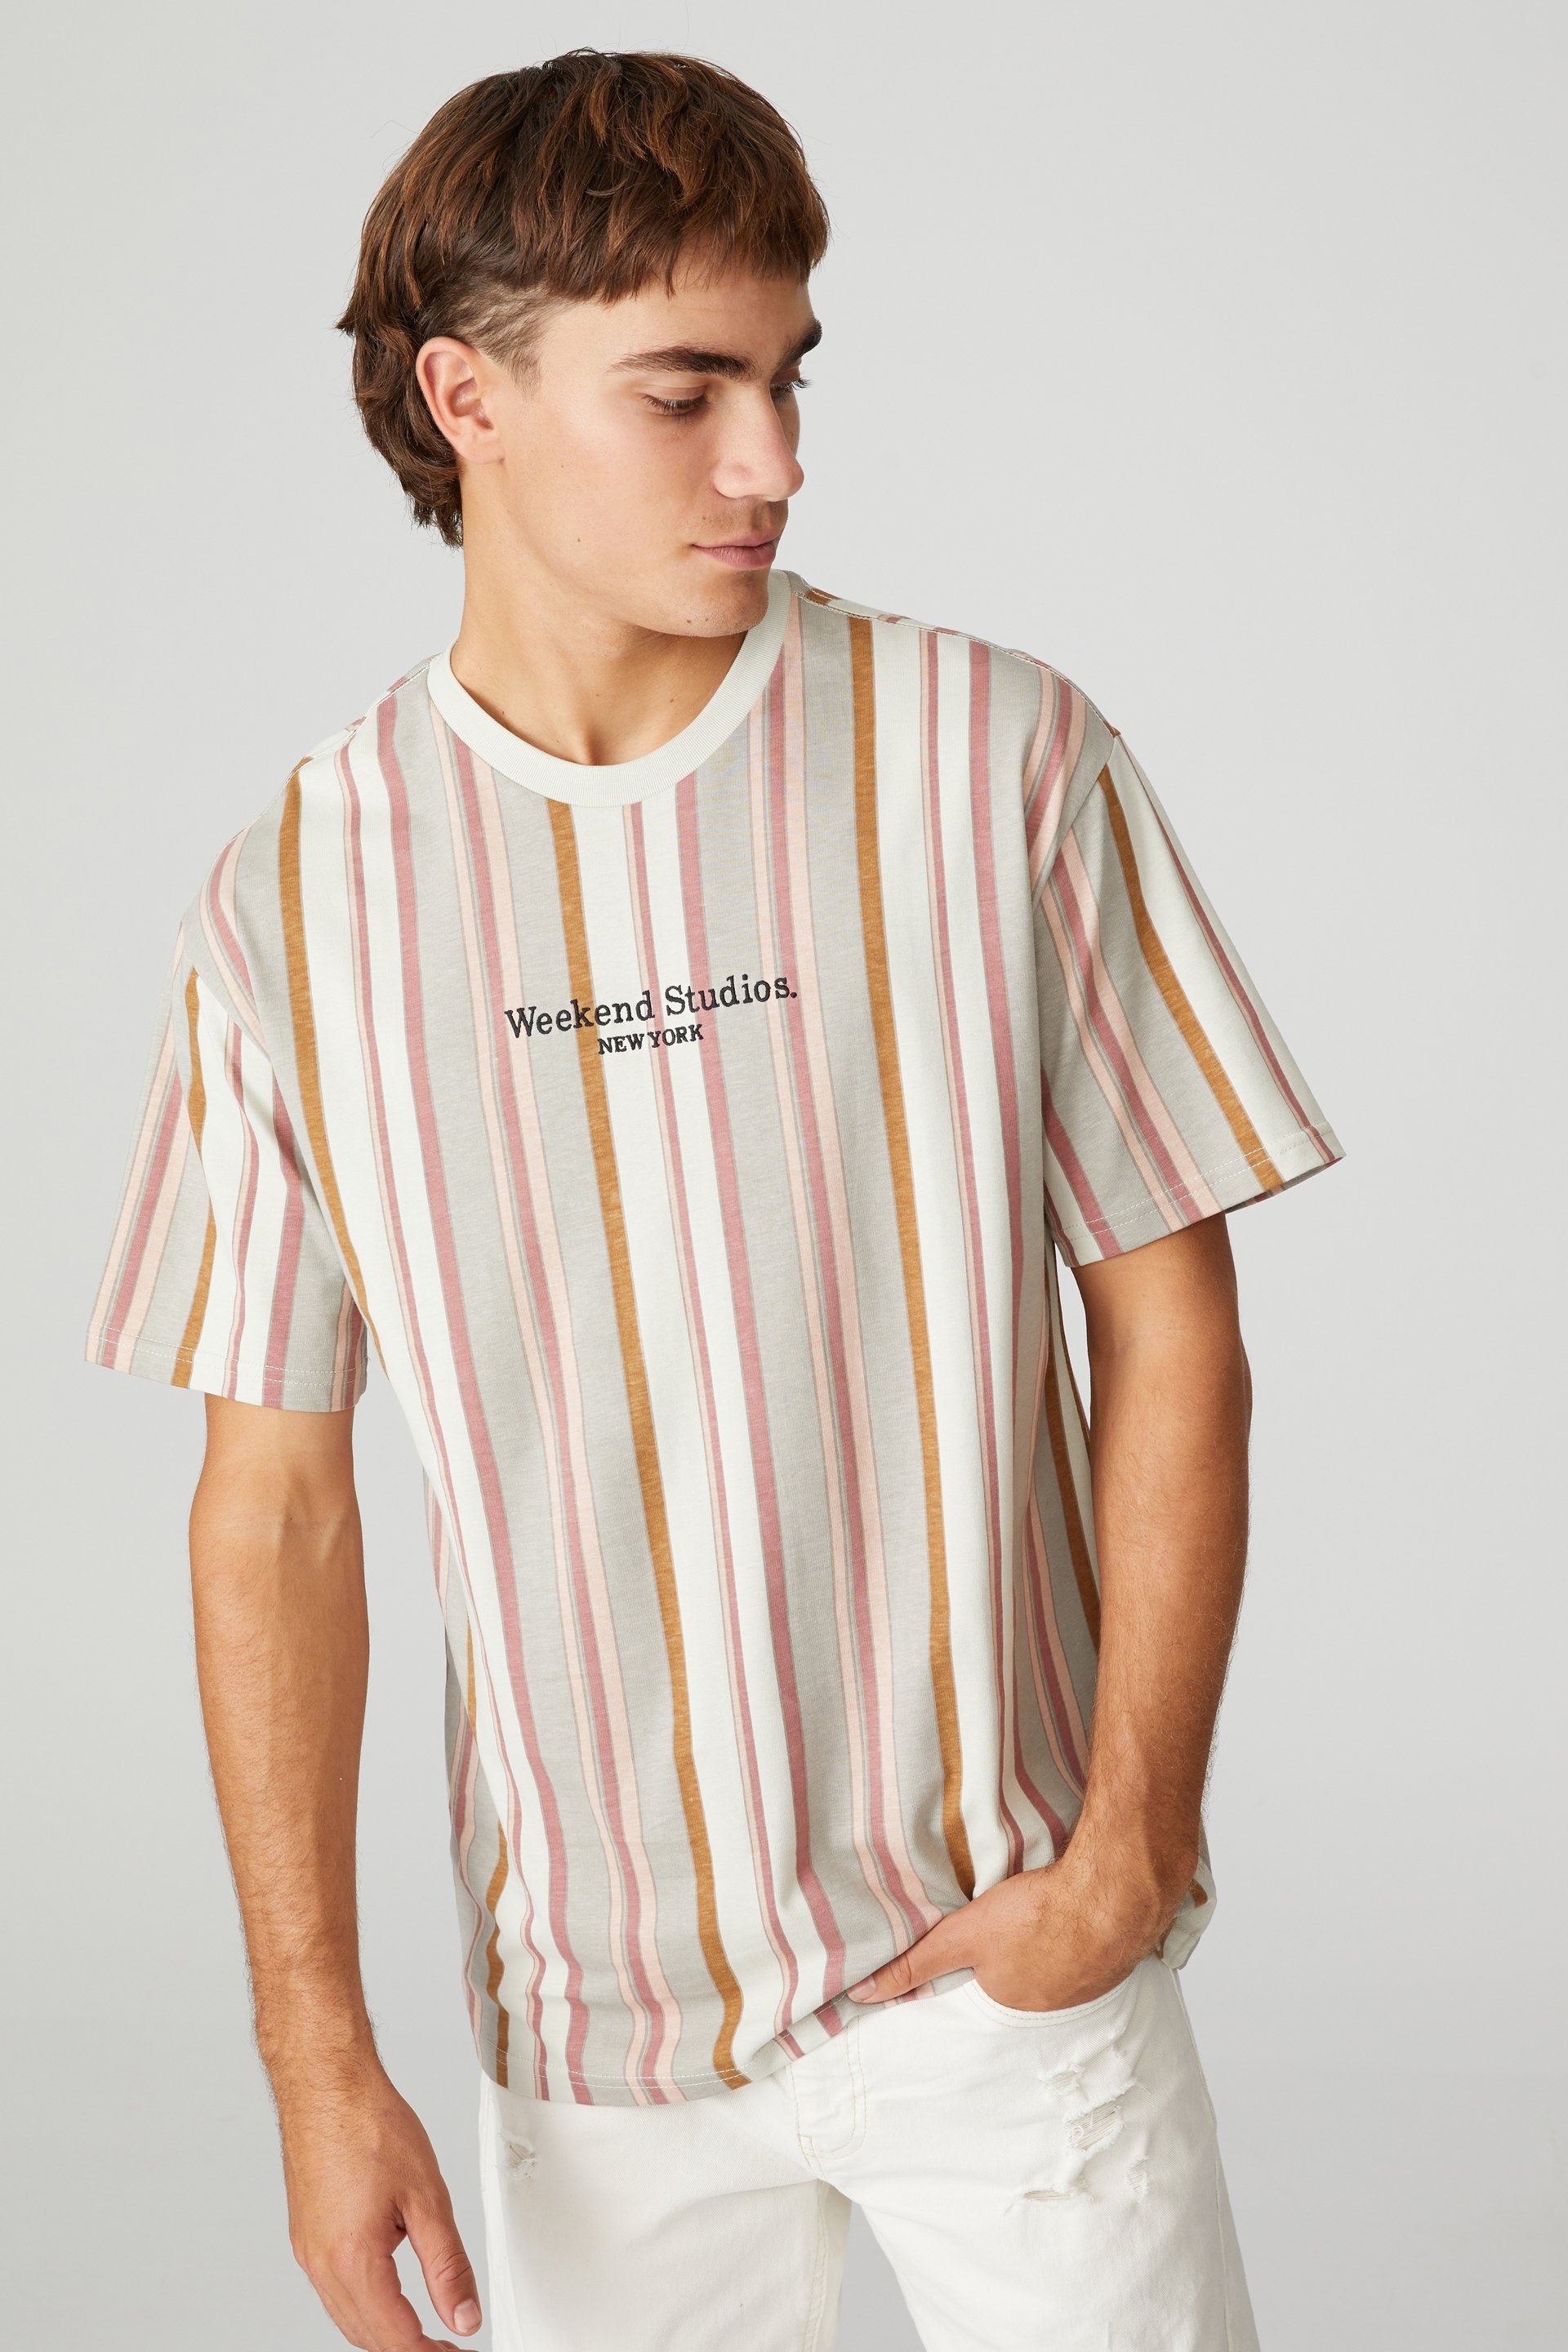 Cotton On Men - Downtown T-Shirt - Ivory mixed stripe